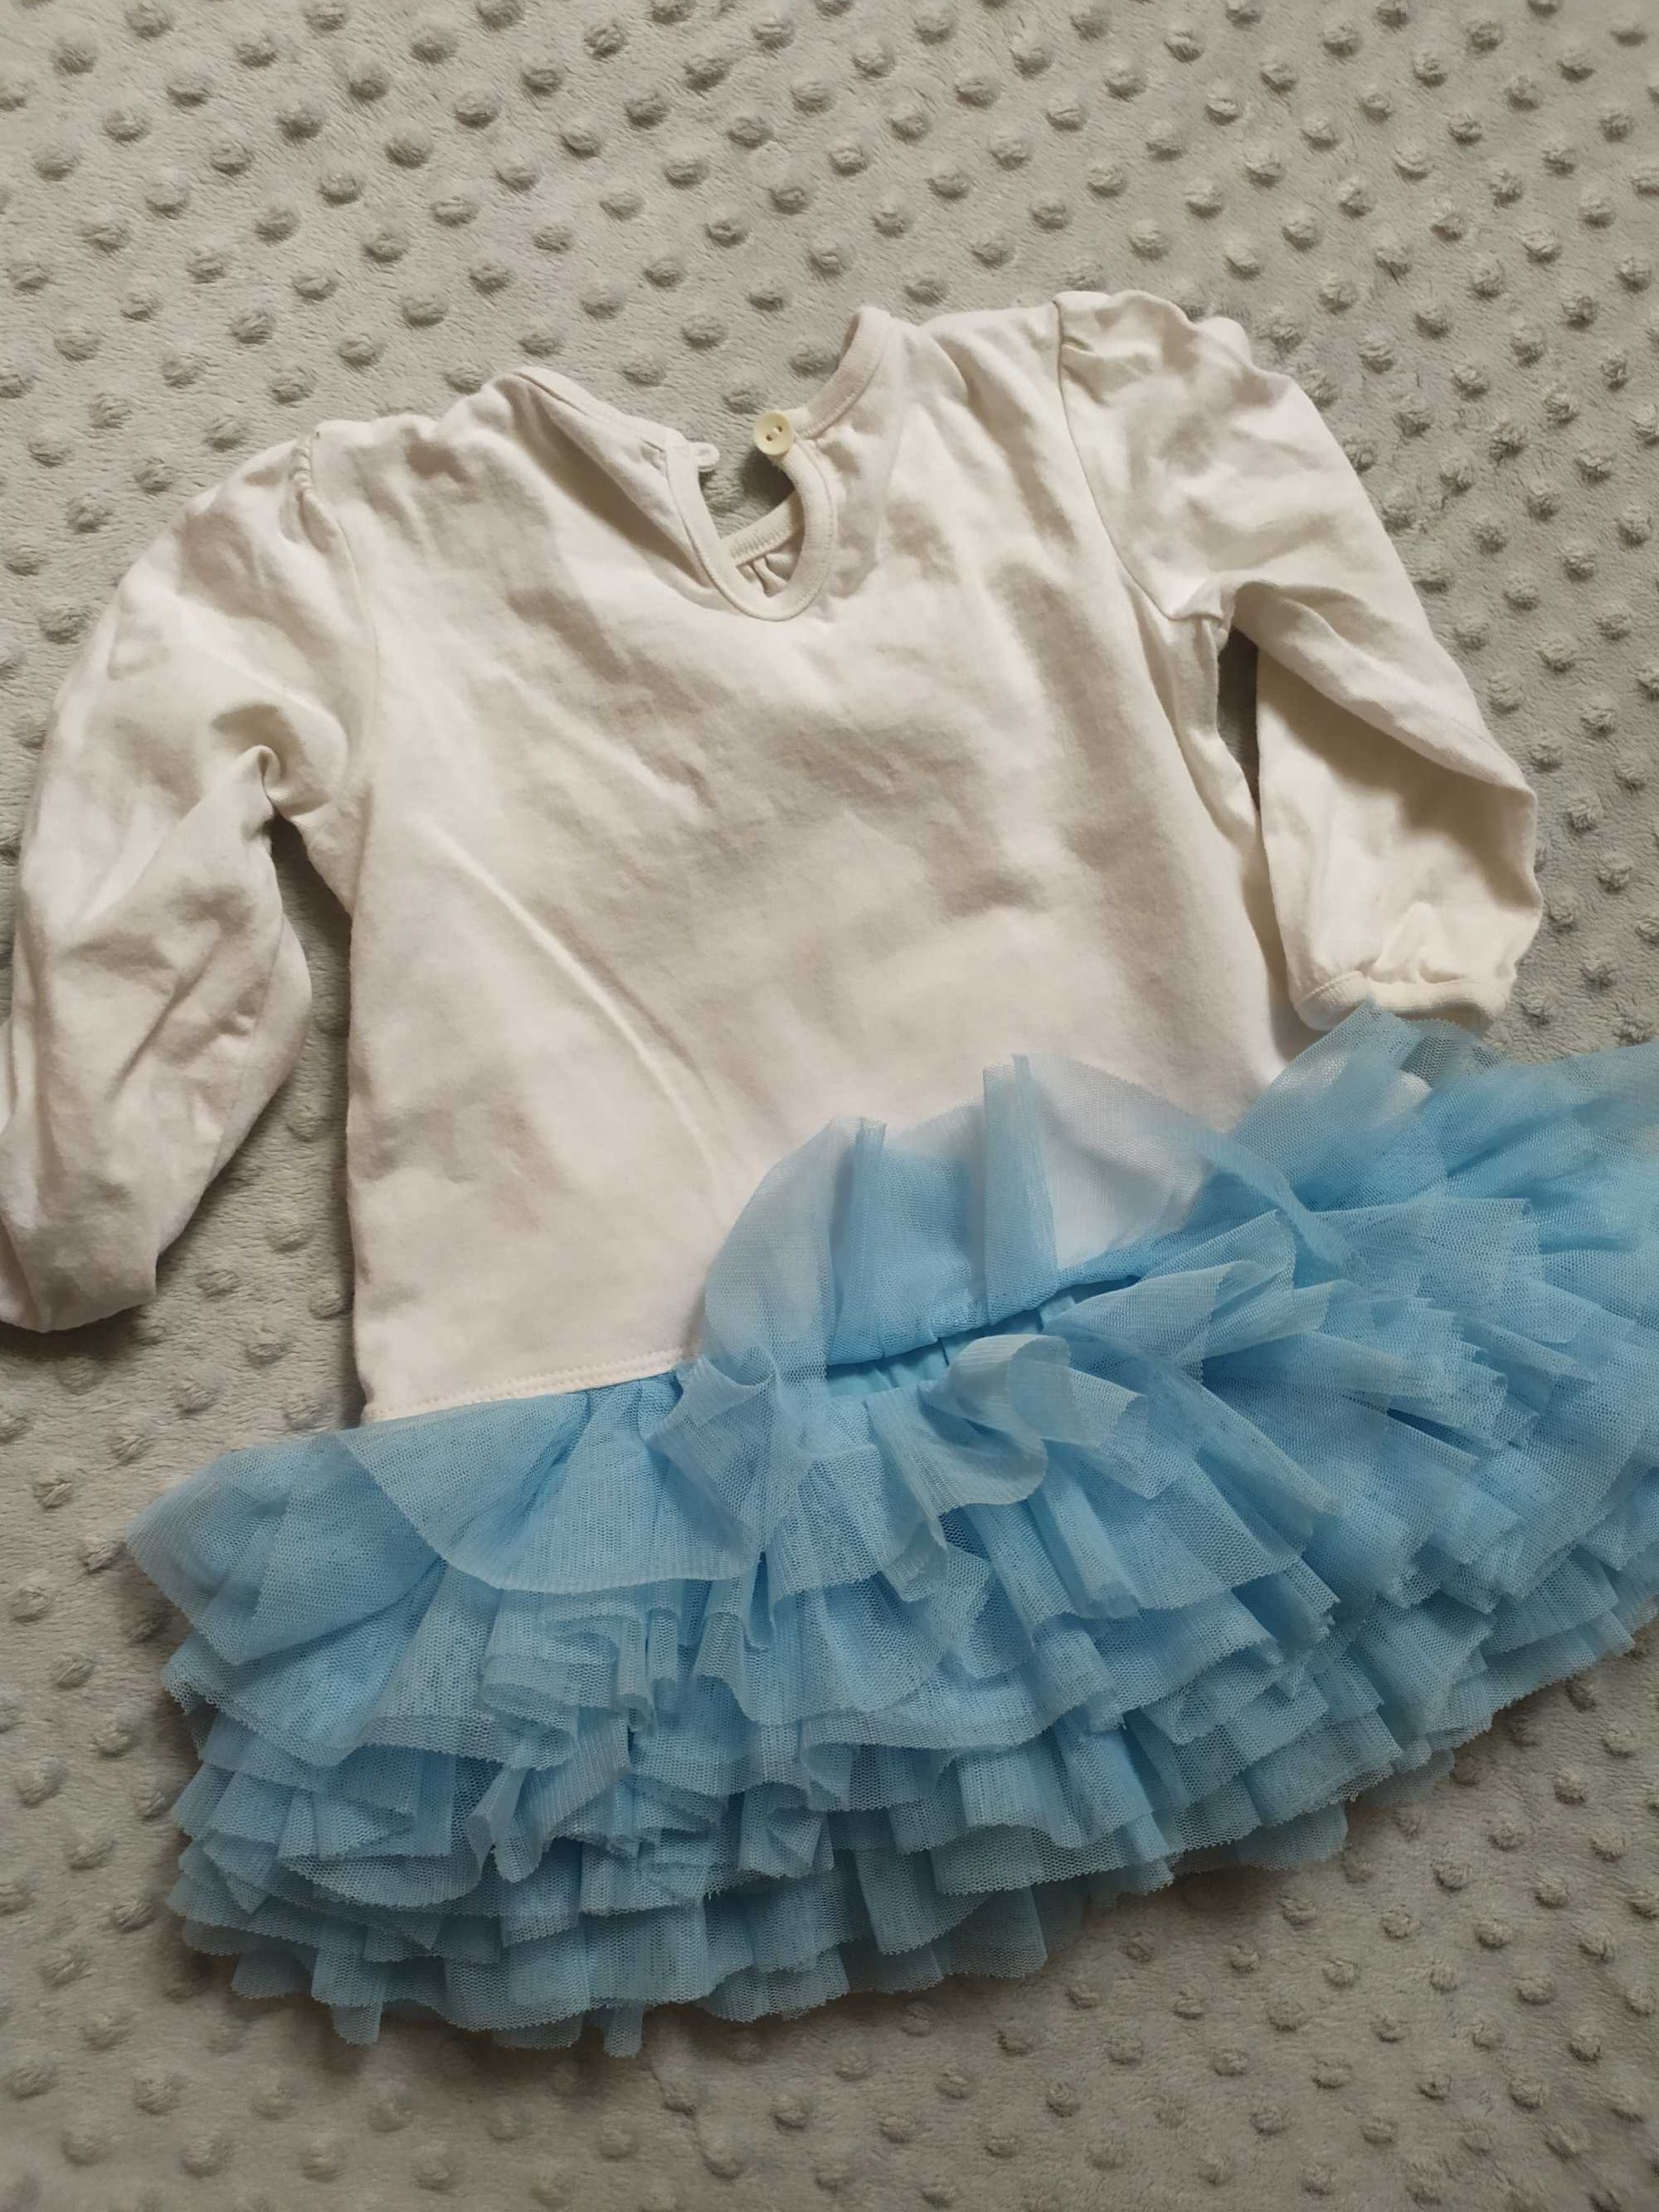 Bluzka sukienka ELSA kraina lodu Disney baby 74